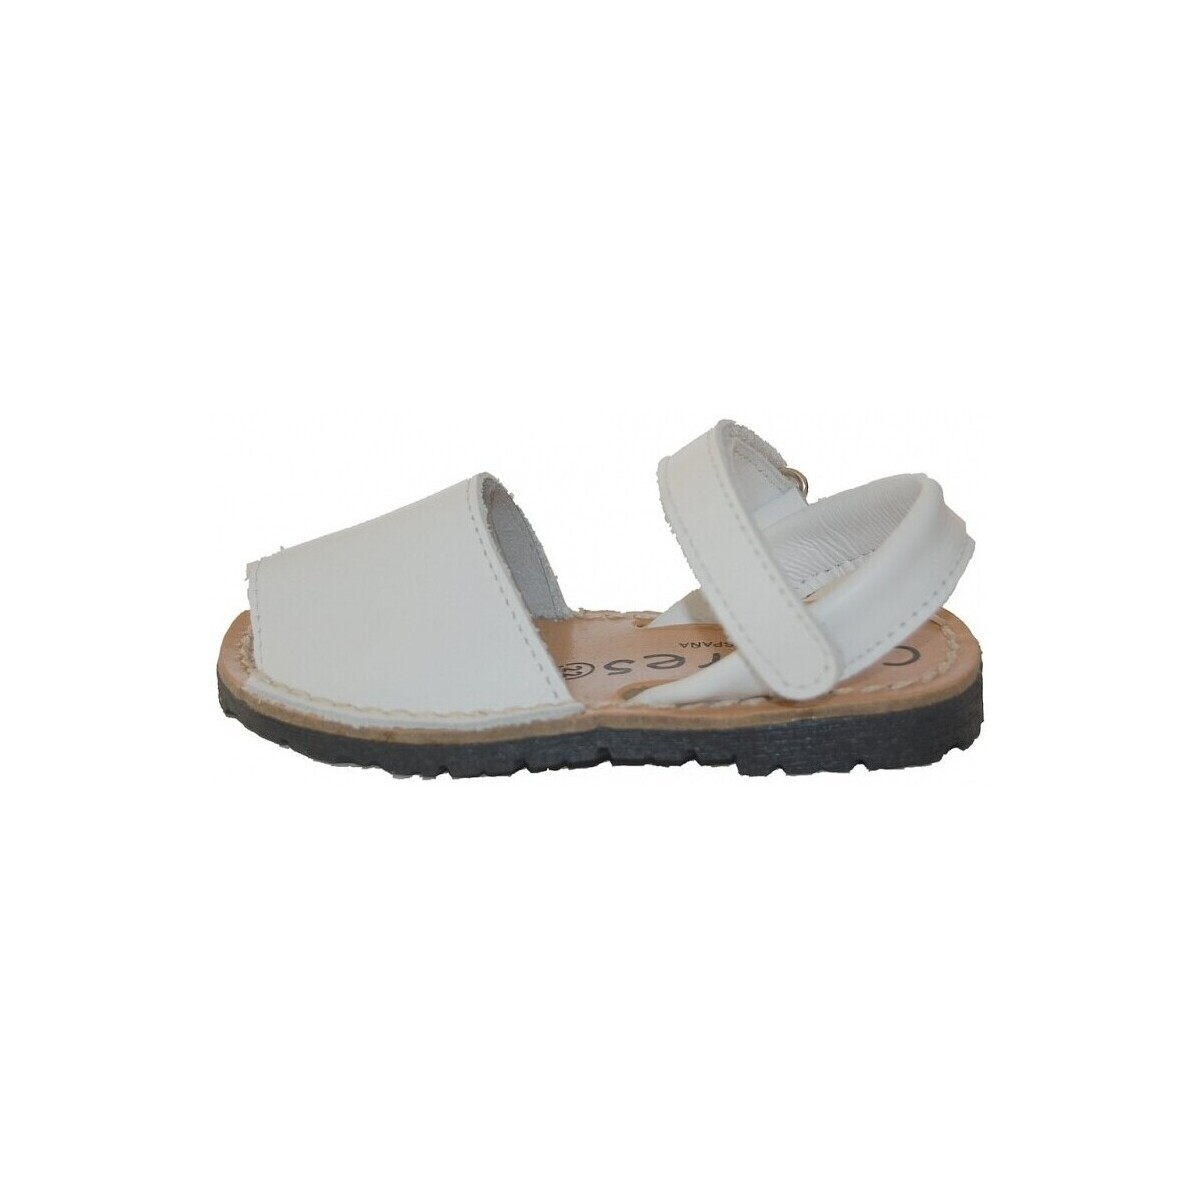 Zapatos Sandalias Colores 17865-18 Blanco